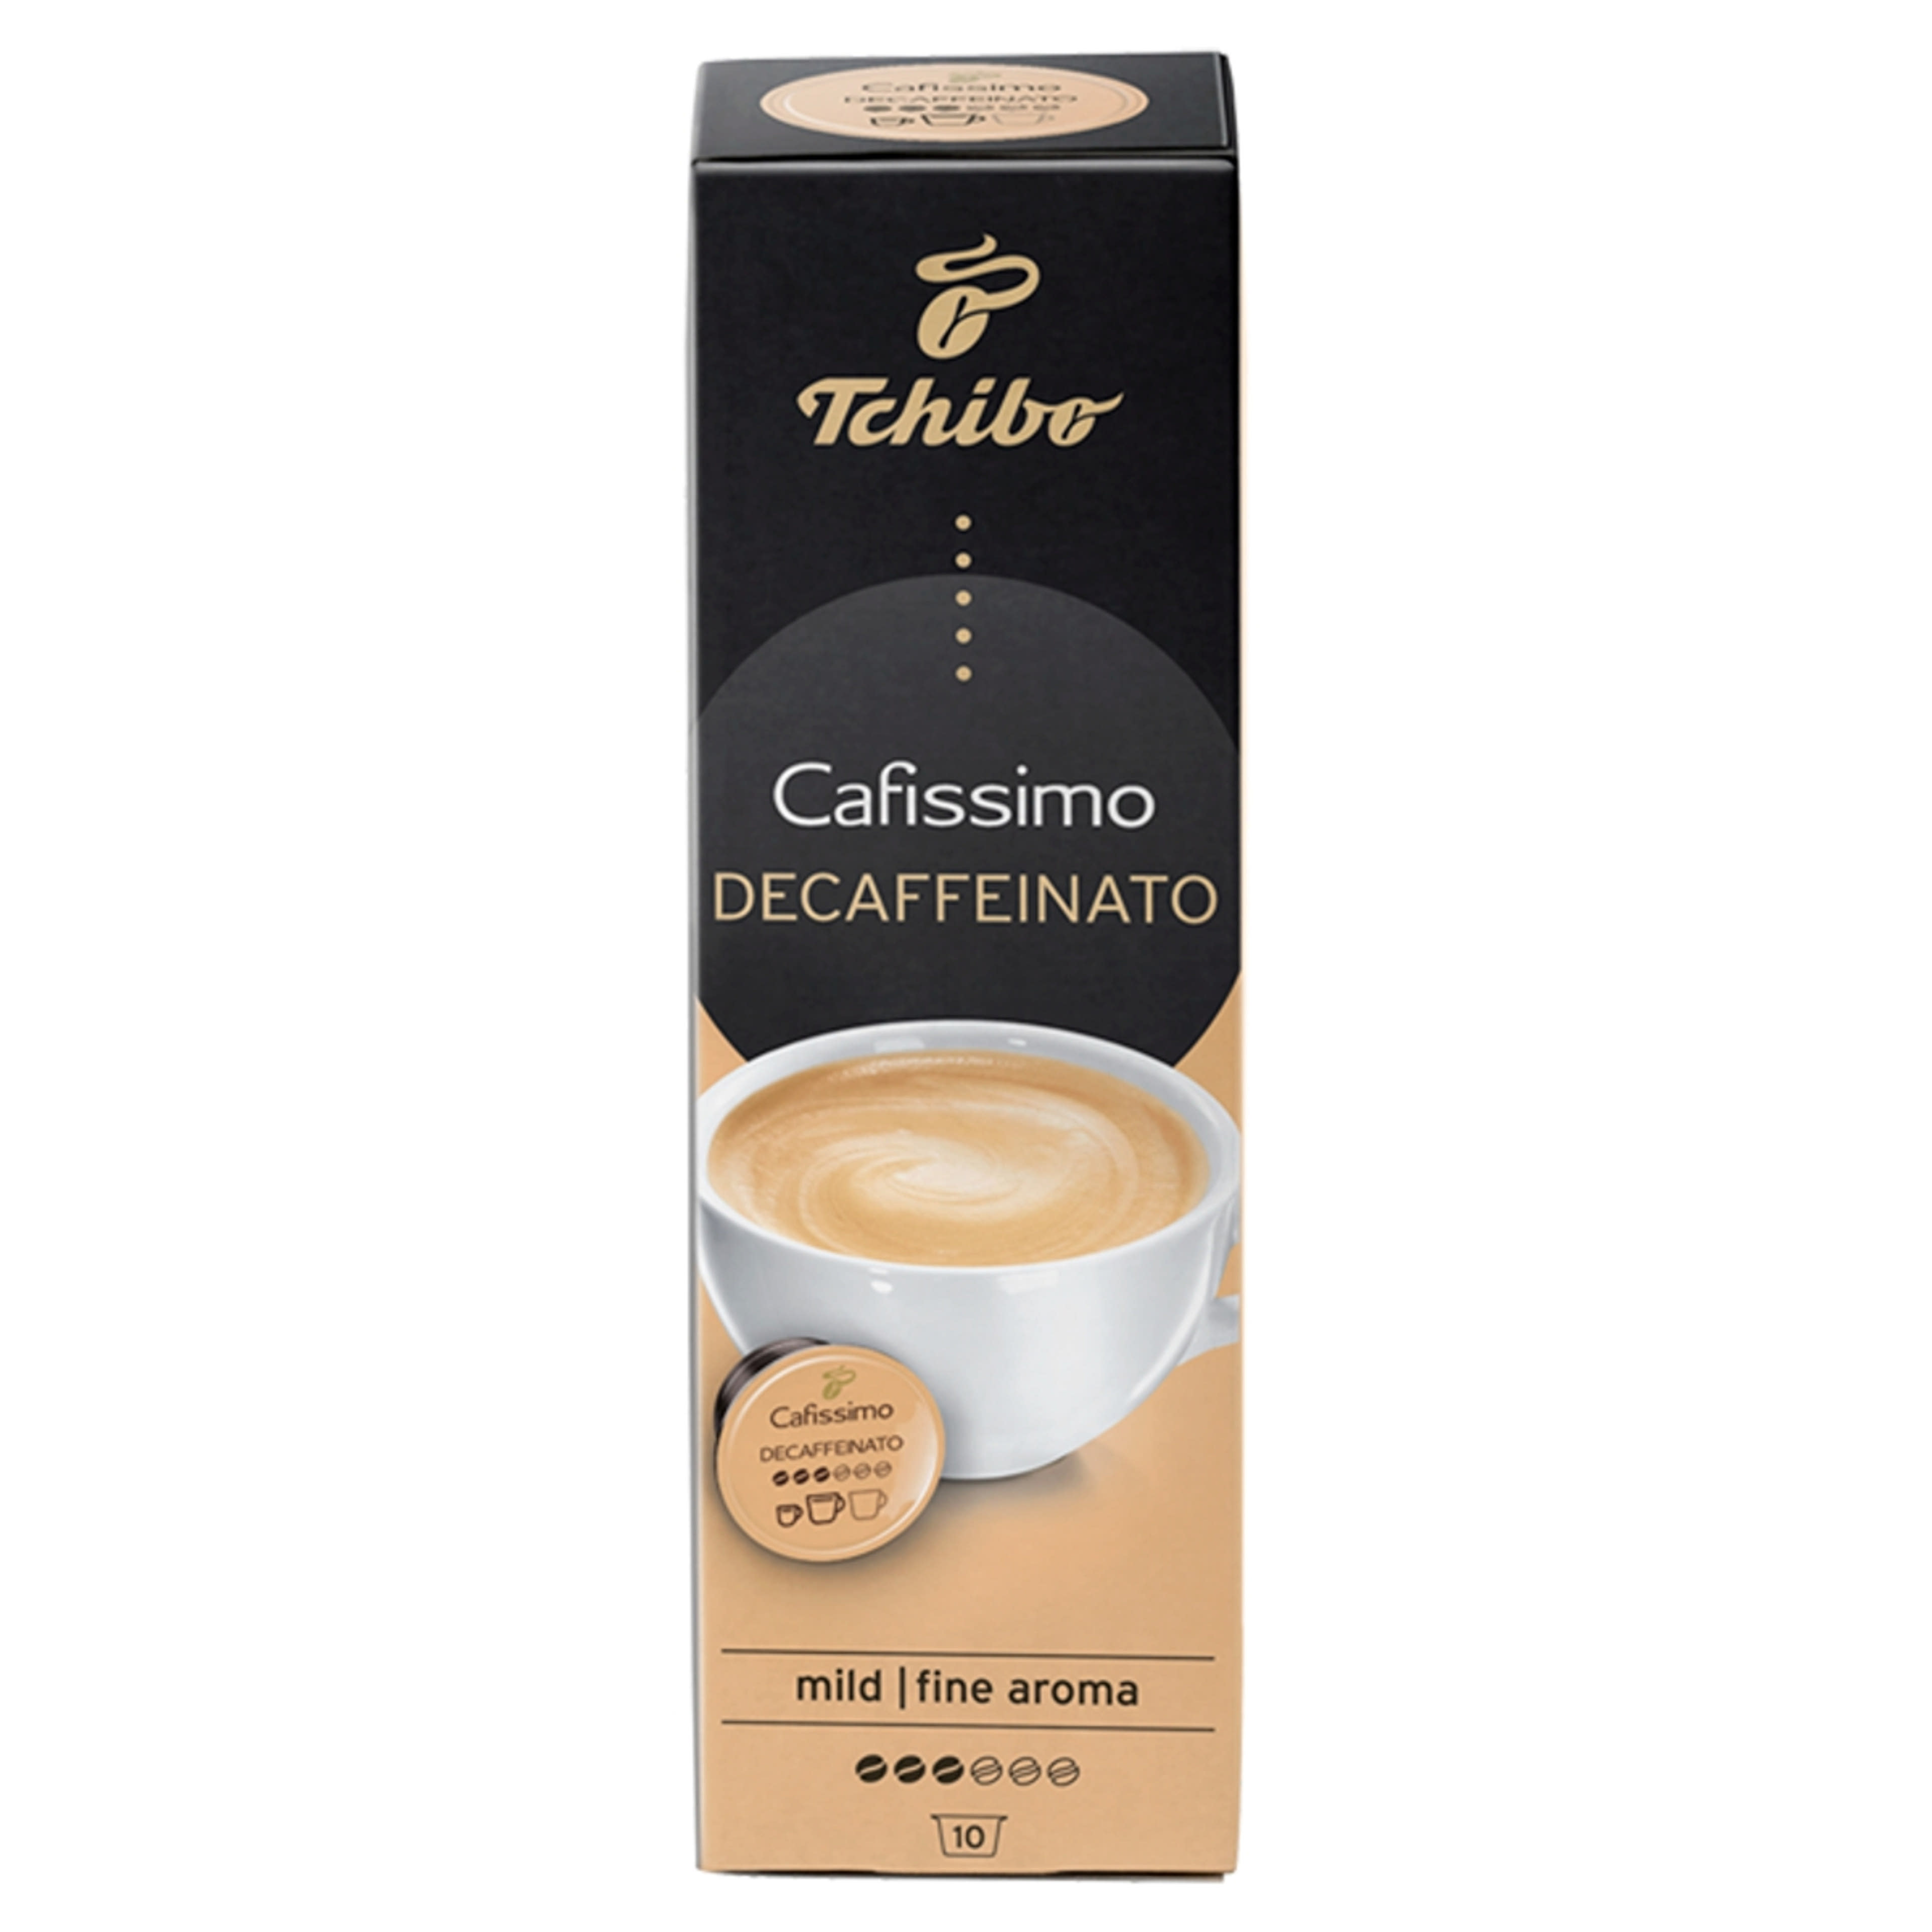 Tchibo Caffe Crema Decaffeinated kávékapszula - 70 g-1